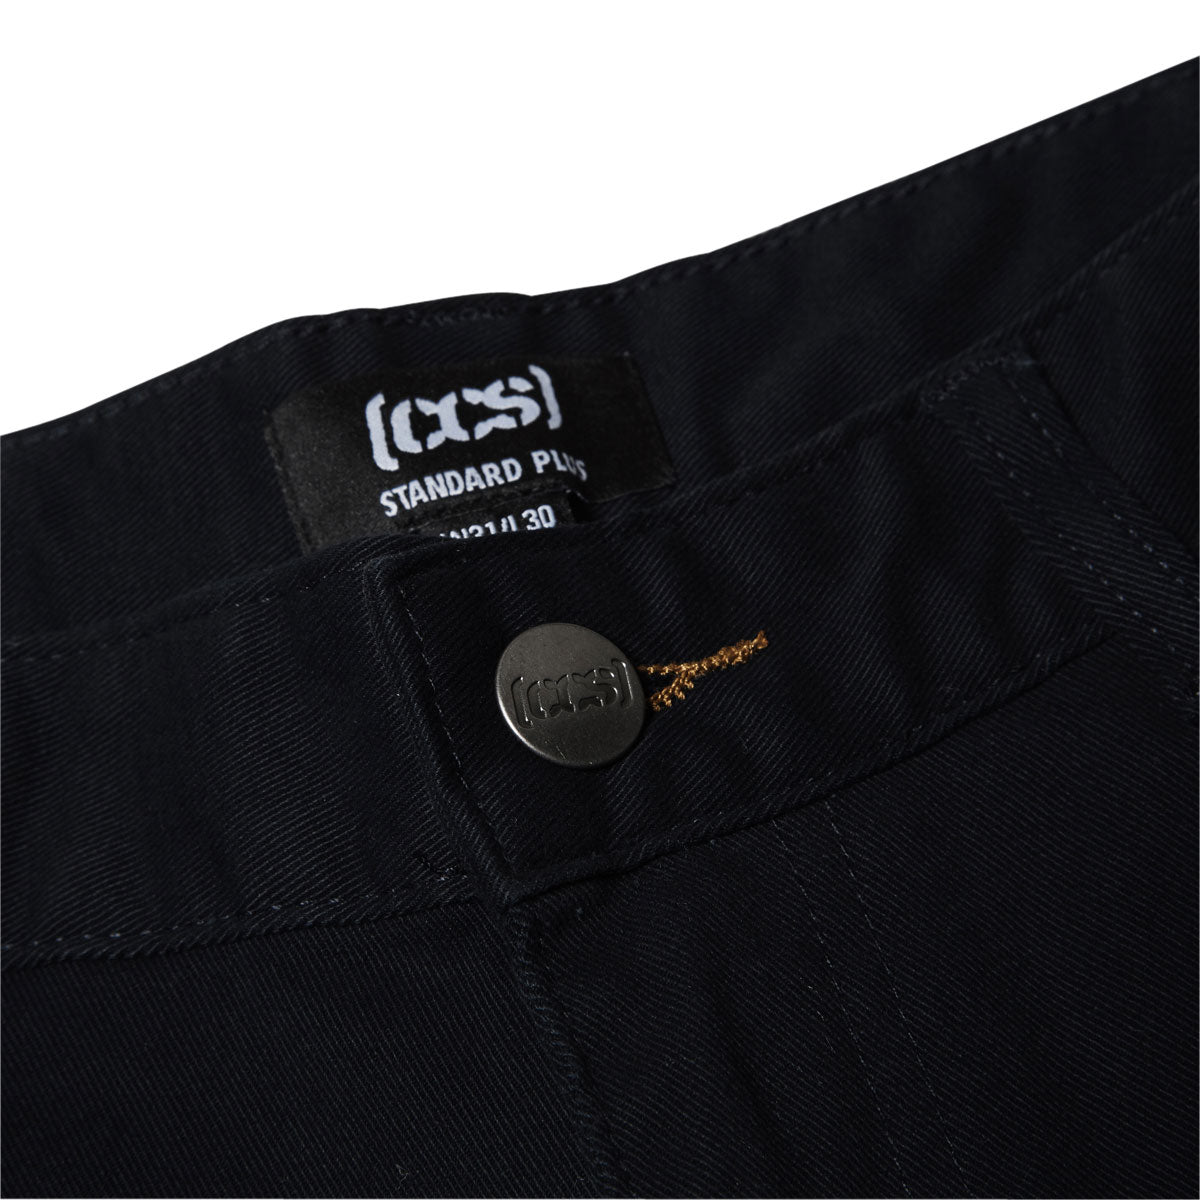 CCS Standard Plus Straight Chino Pants - Navy image 6